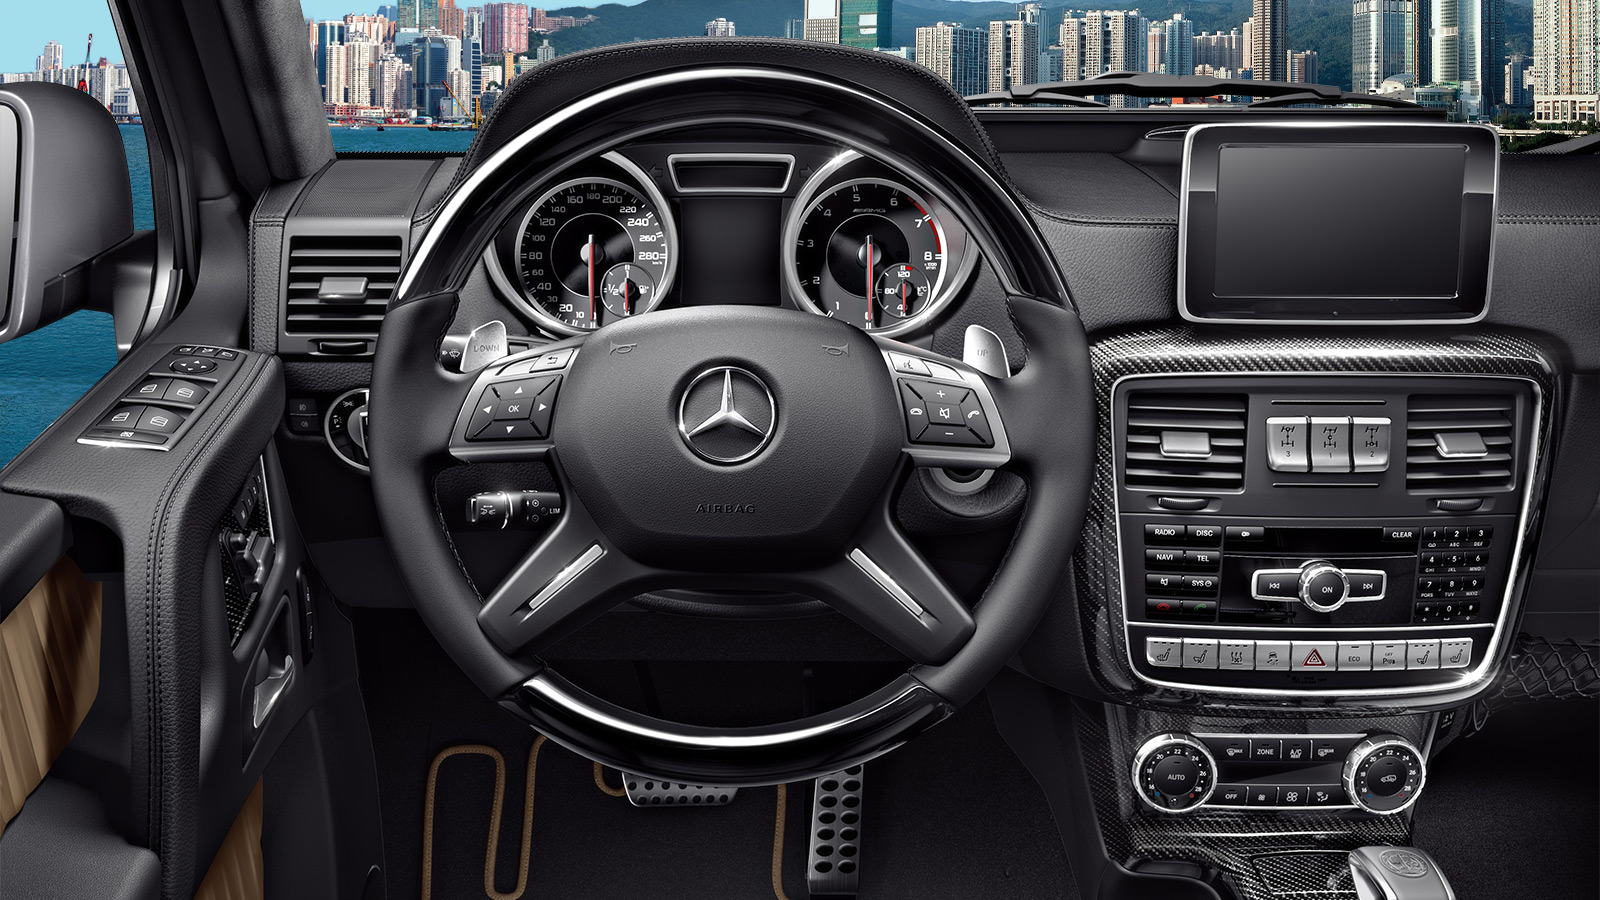 Mercedes Benz AMG G 65 interior front view